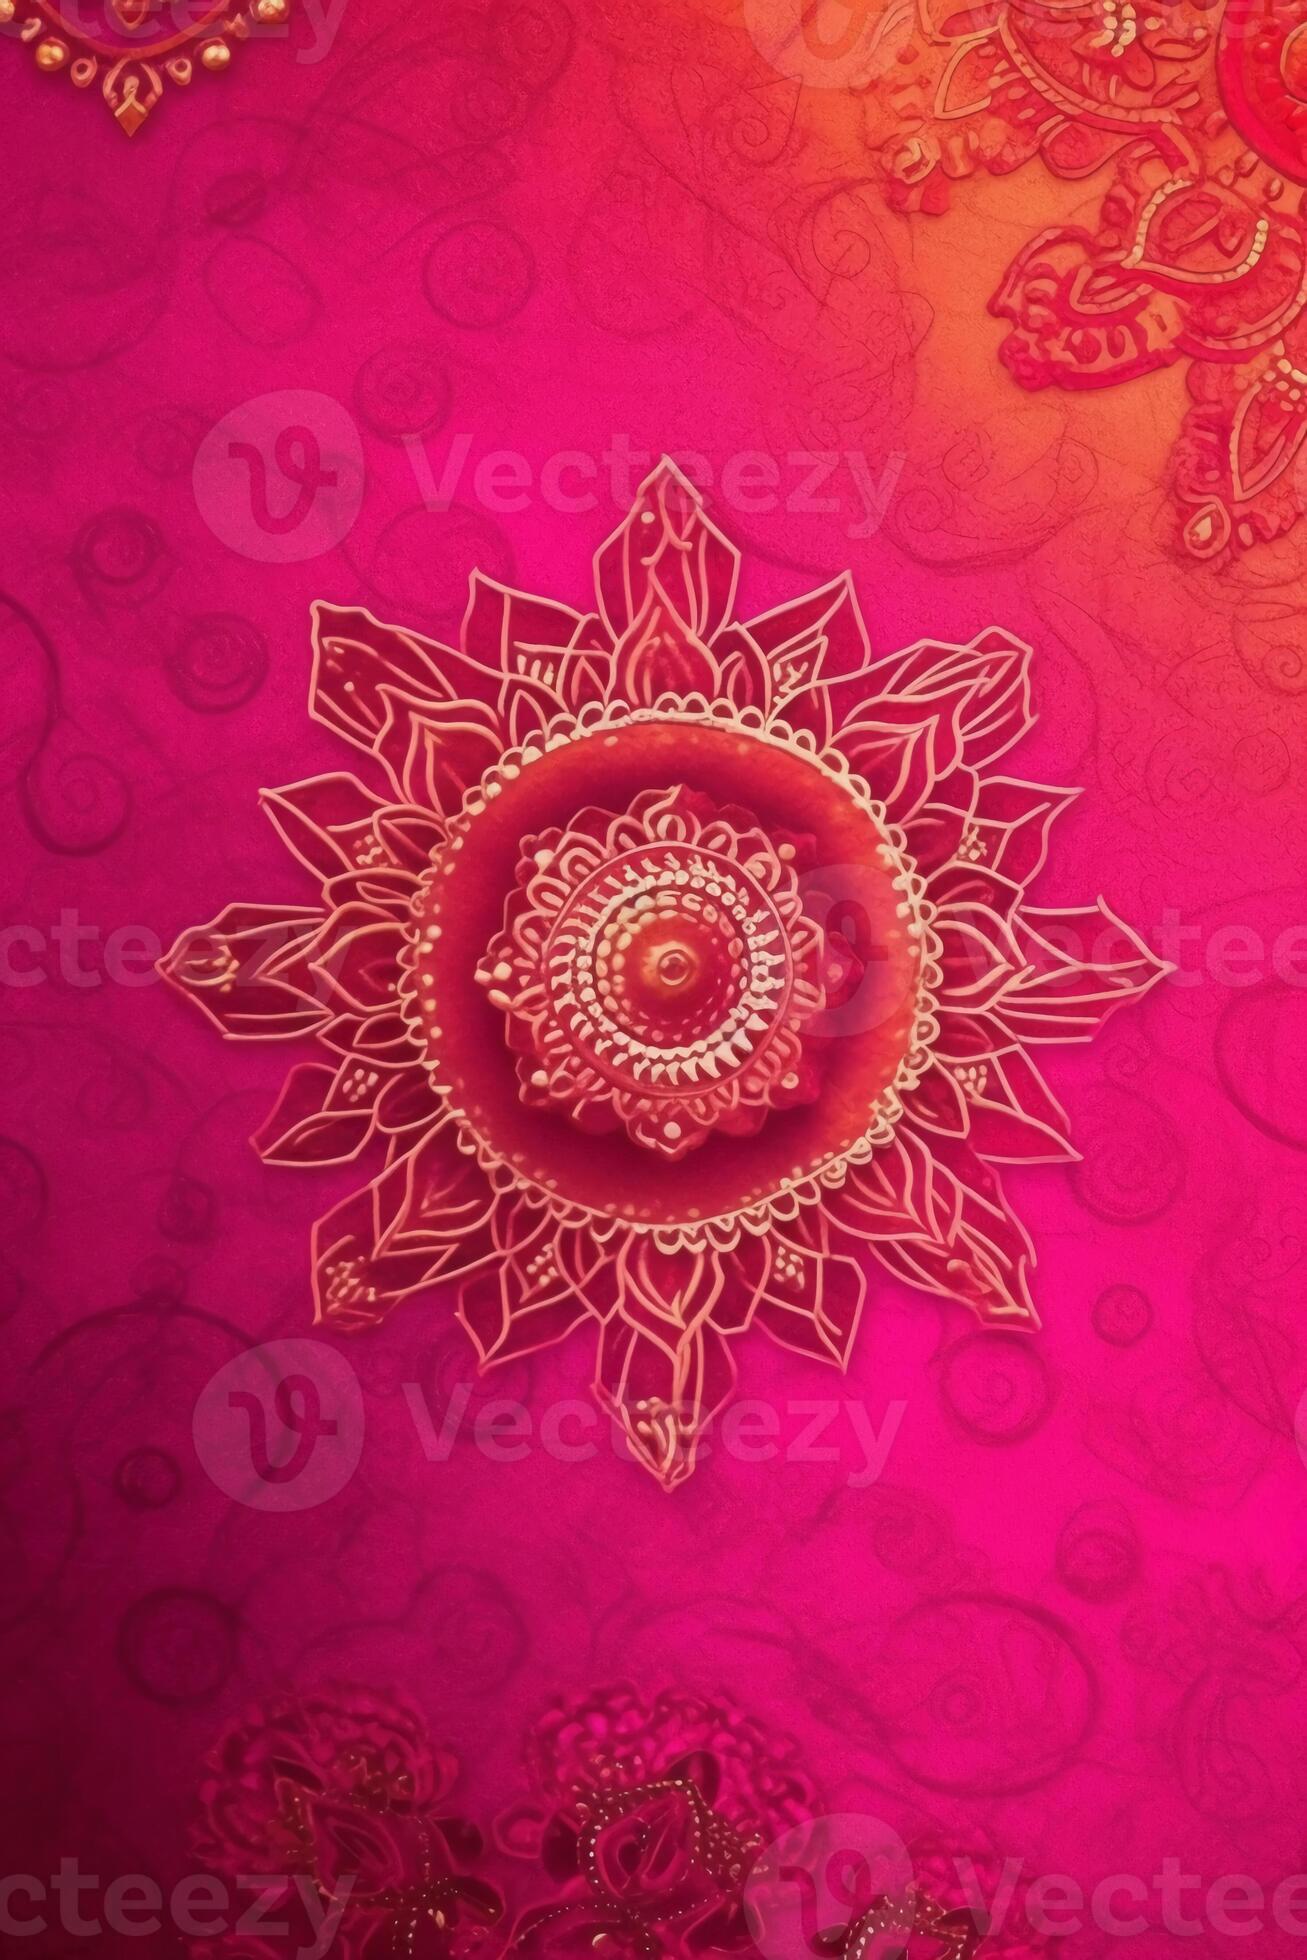 Fuchsia Crayola color background paper texture Rangoli pattern painting. AIgenerative 24186050 Stock Photo at Vecteezy